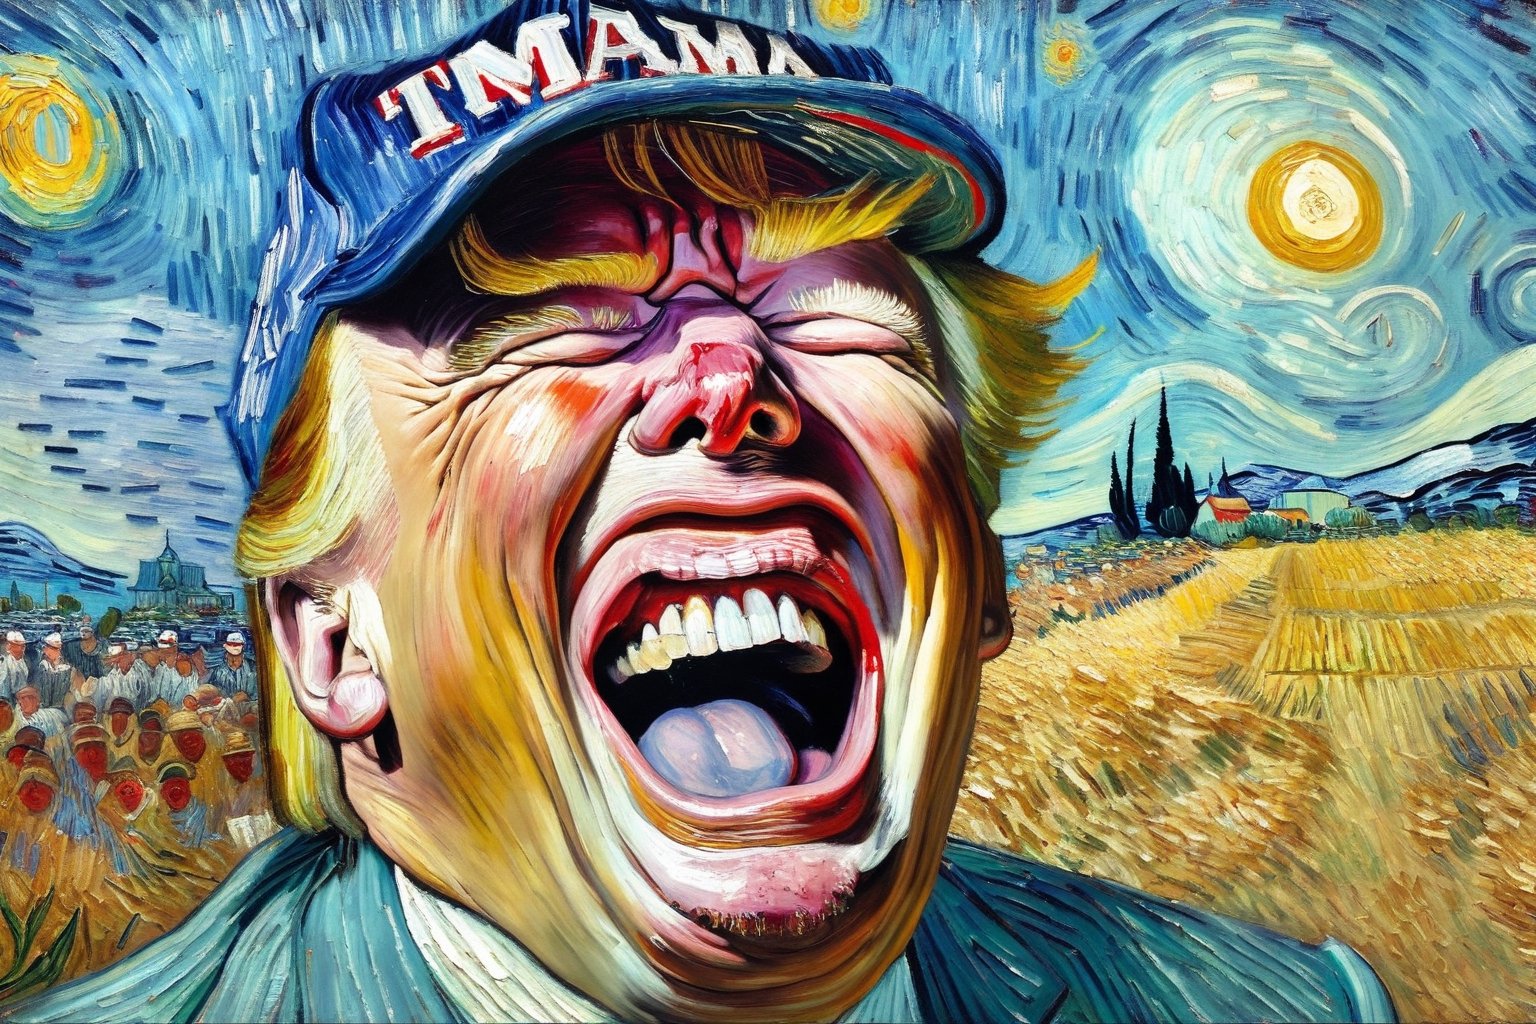 v0ng44g, p0rtr14t, a painting Close up of Donald Trump laughing with his mouth open, wearing MAGA baseball cap, by van Gogh